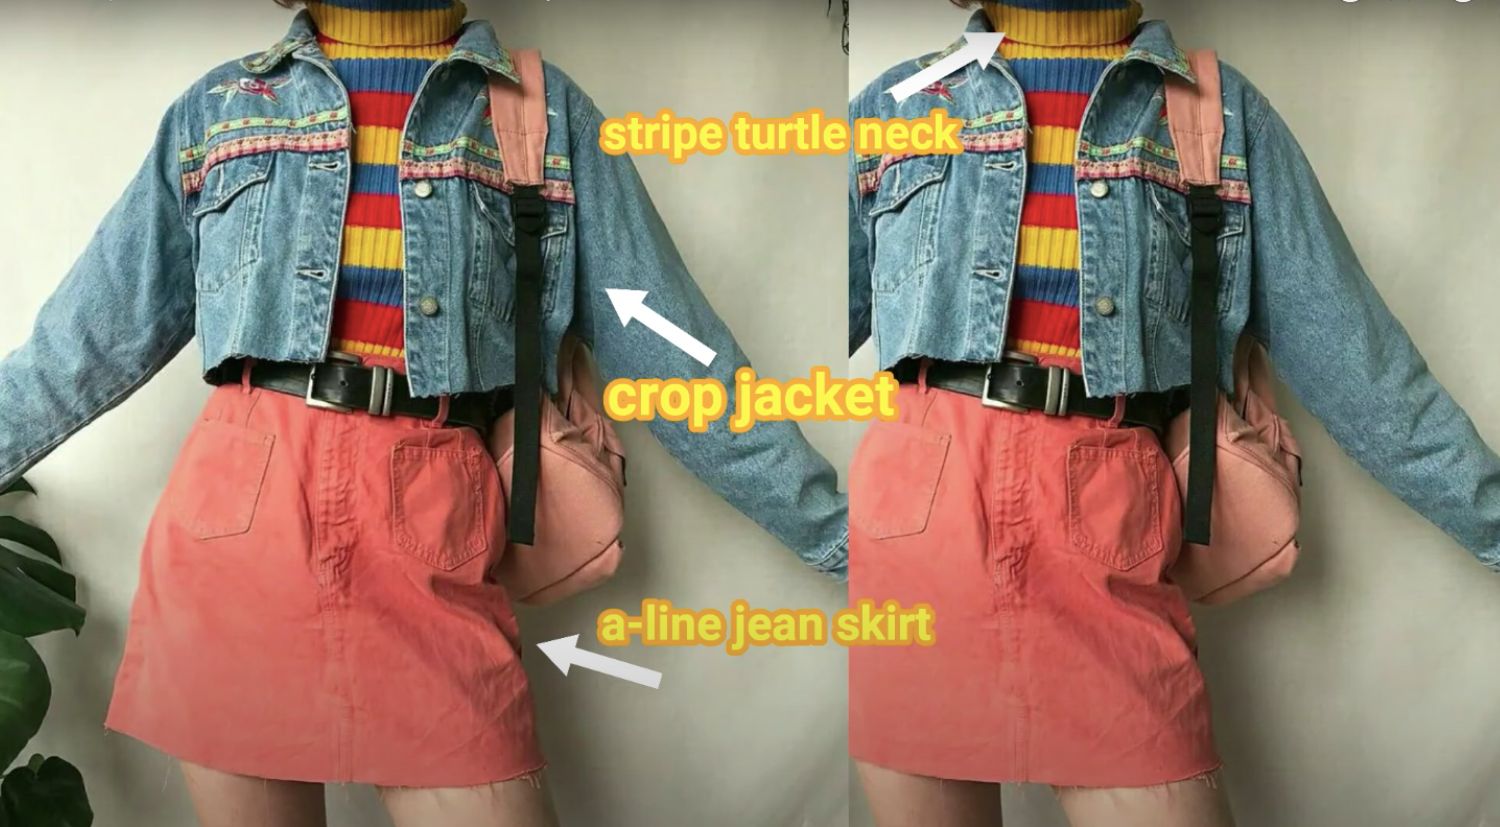 Stripe Turtleneck, Crop Jacket, A-lined Jean Skirt